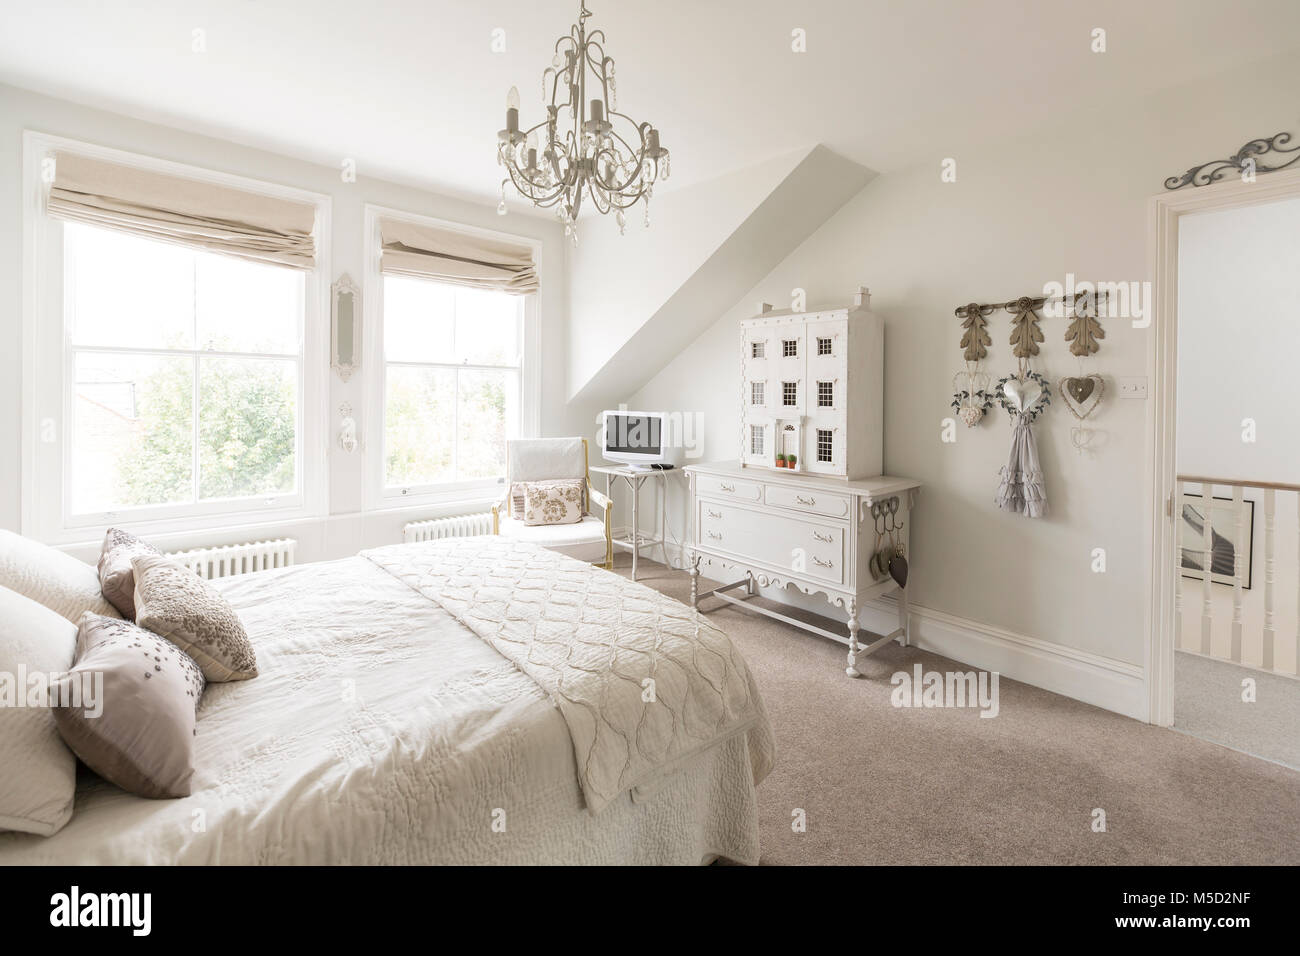 White, luxury home showcase interior bedroom with chandelier Stock Photo